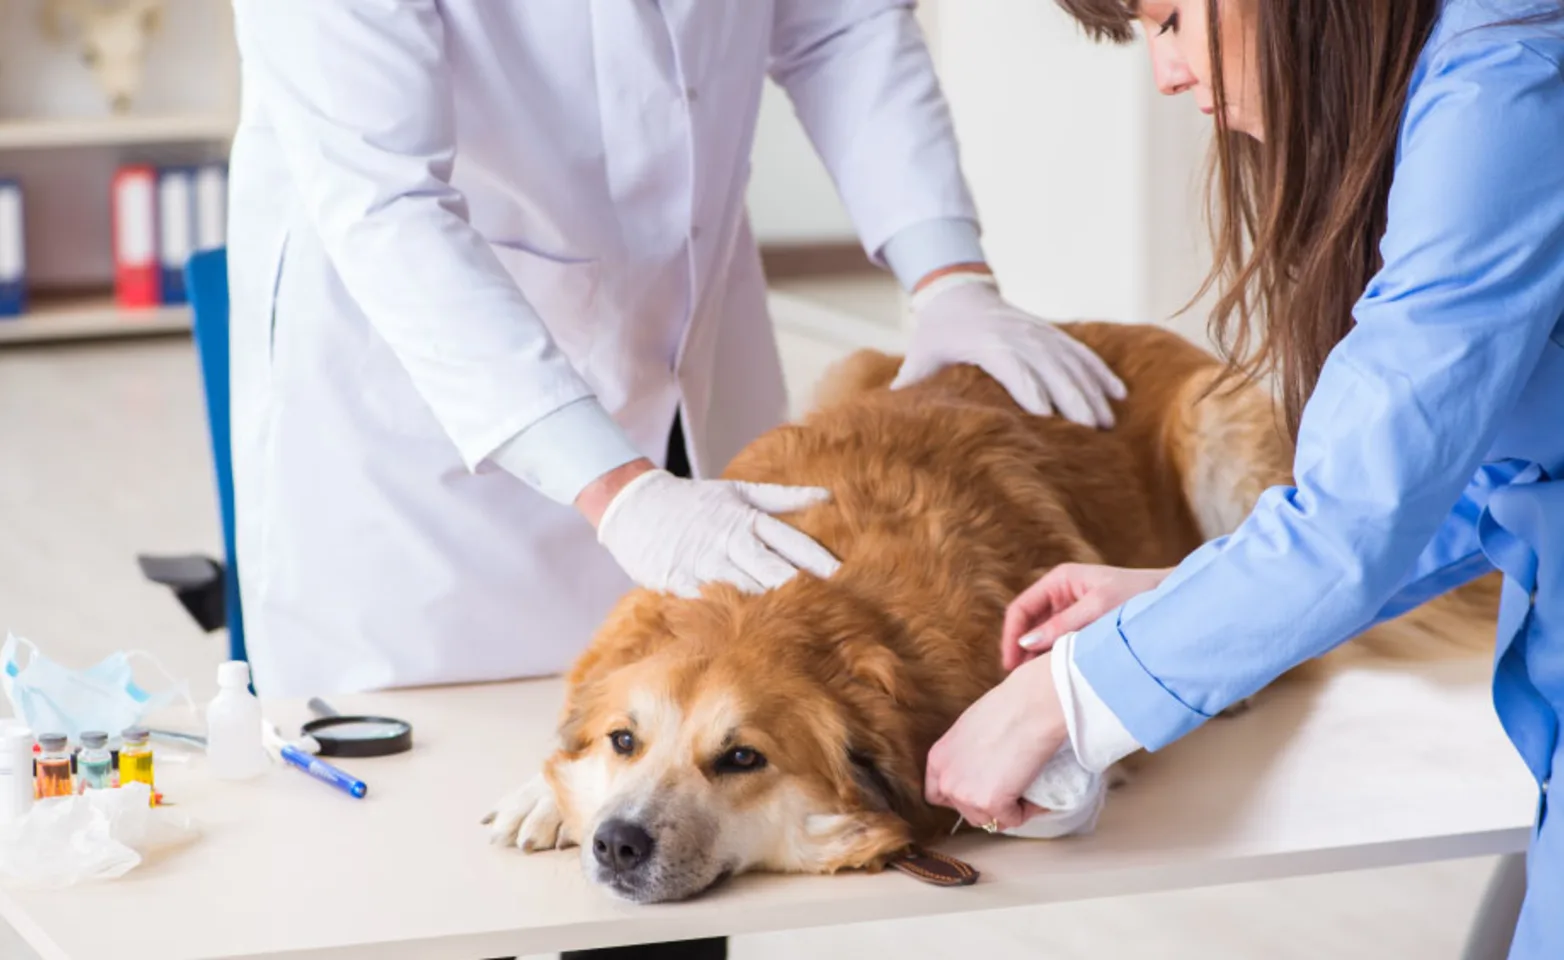 Dog having its leg bandaged by veterinarians